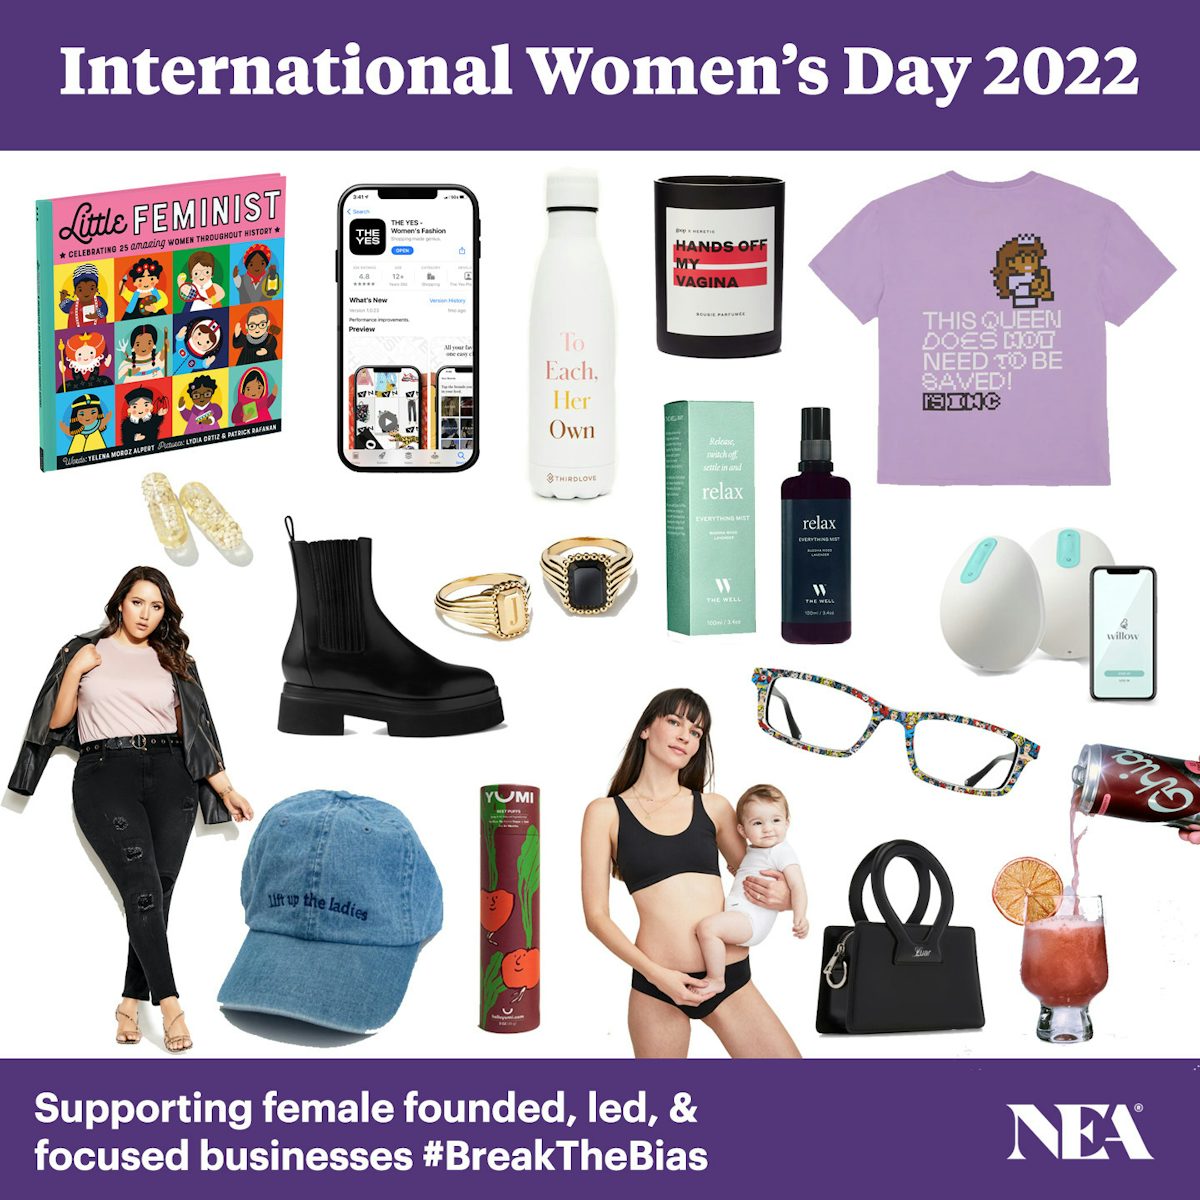 https://www.nea.com/_next/image?url=https://cms.nea.com/assets/international-womens-day_breakthebias.jpg&w=1200&q=90